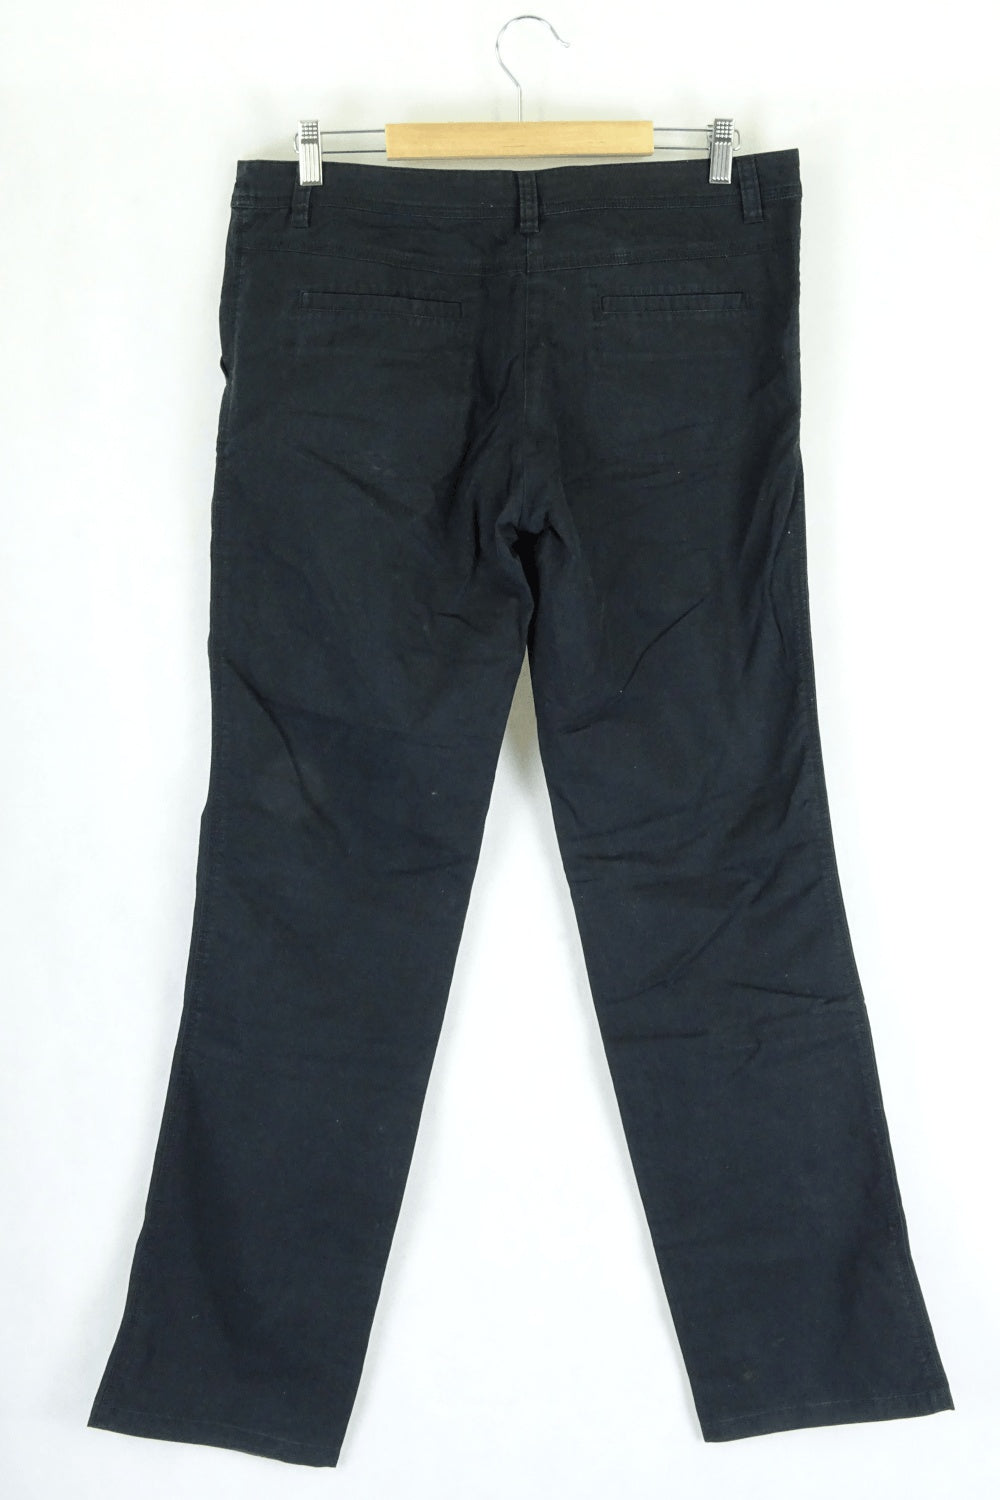 Woodland Black Pants 34